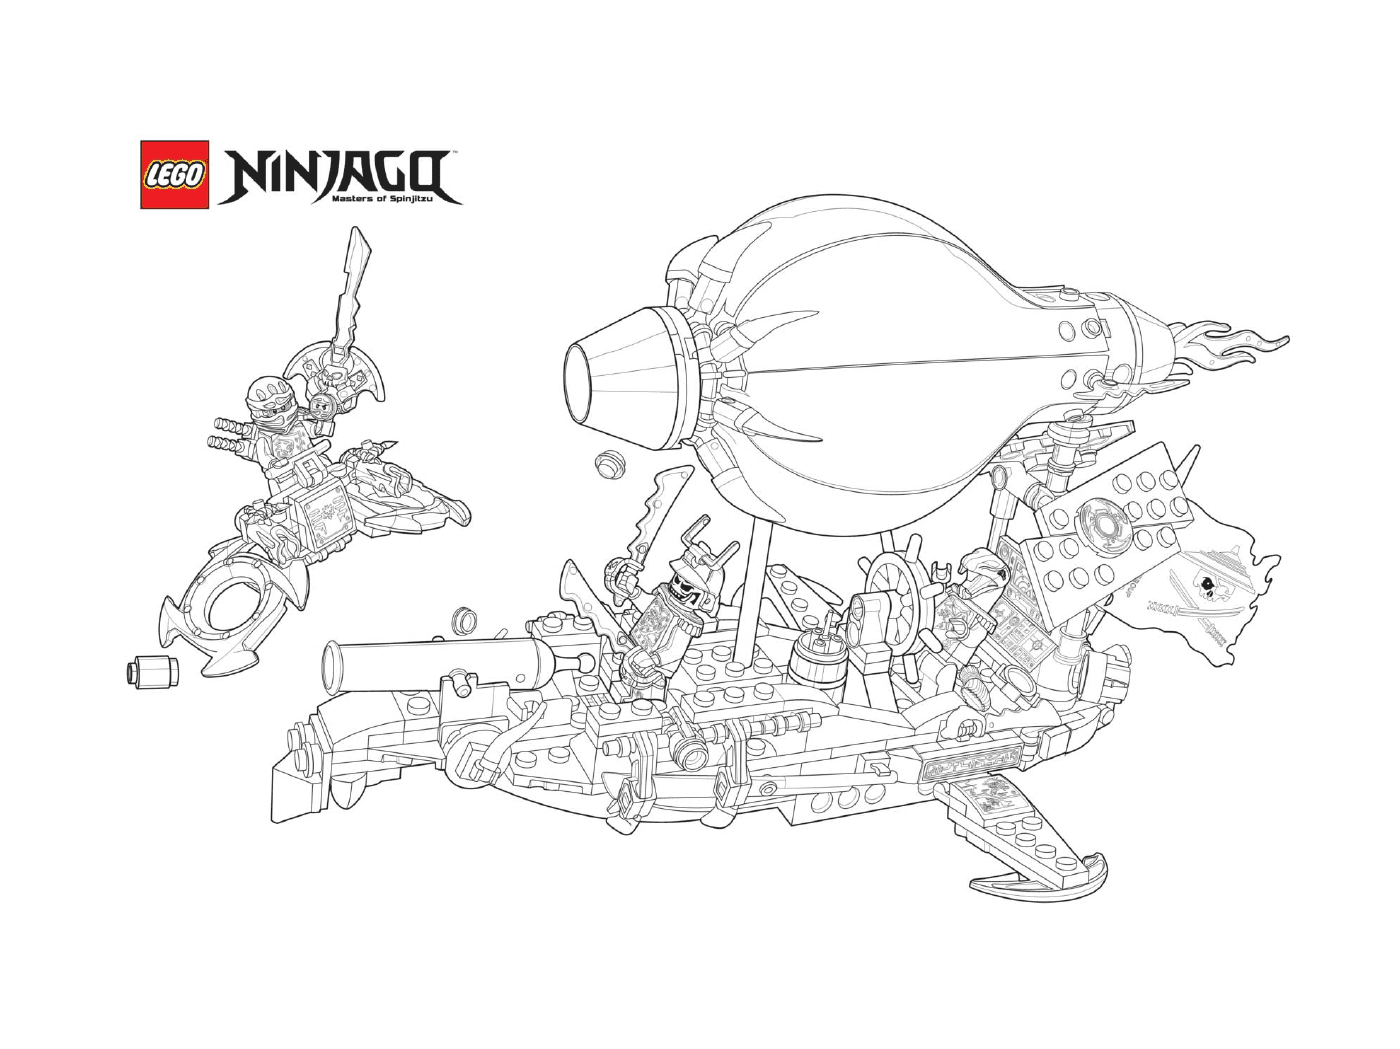  Ninjago vs. inimigos de barco 